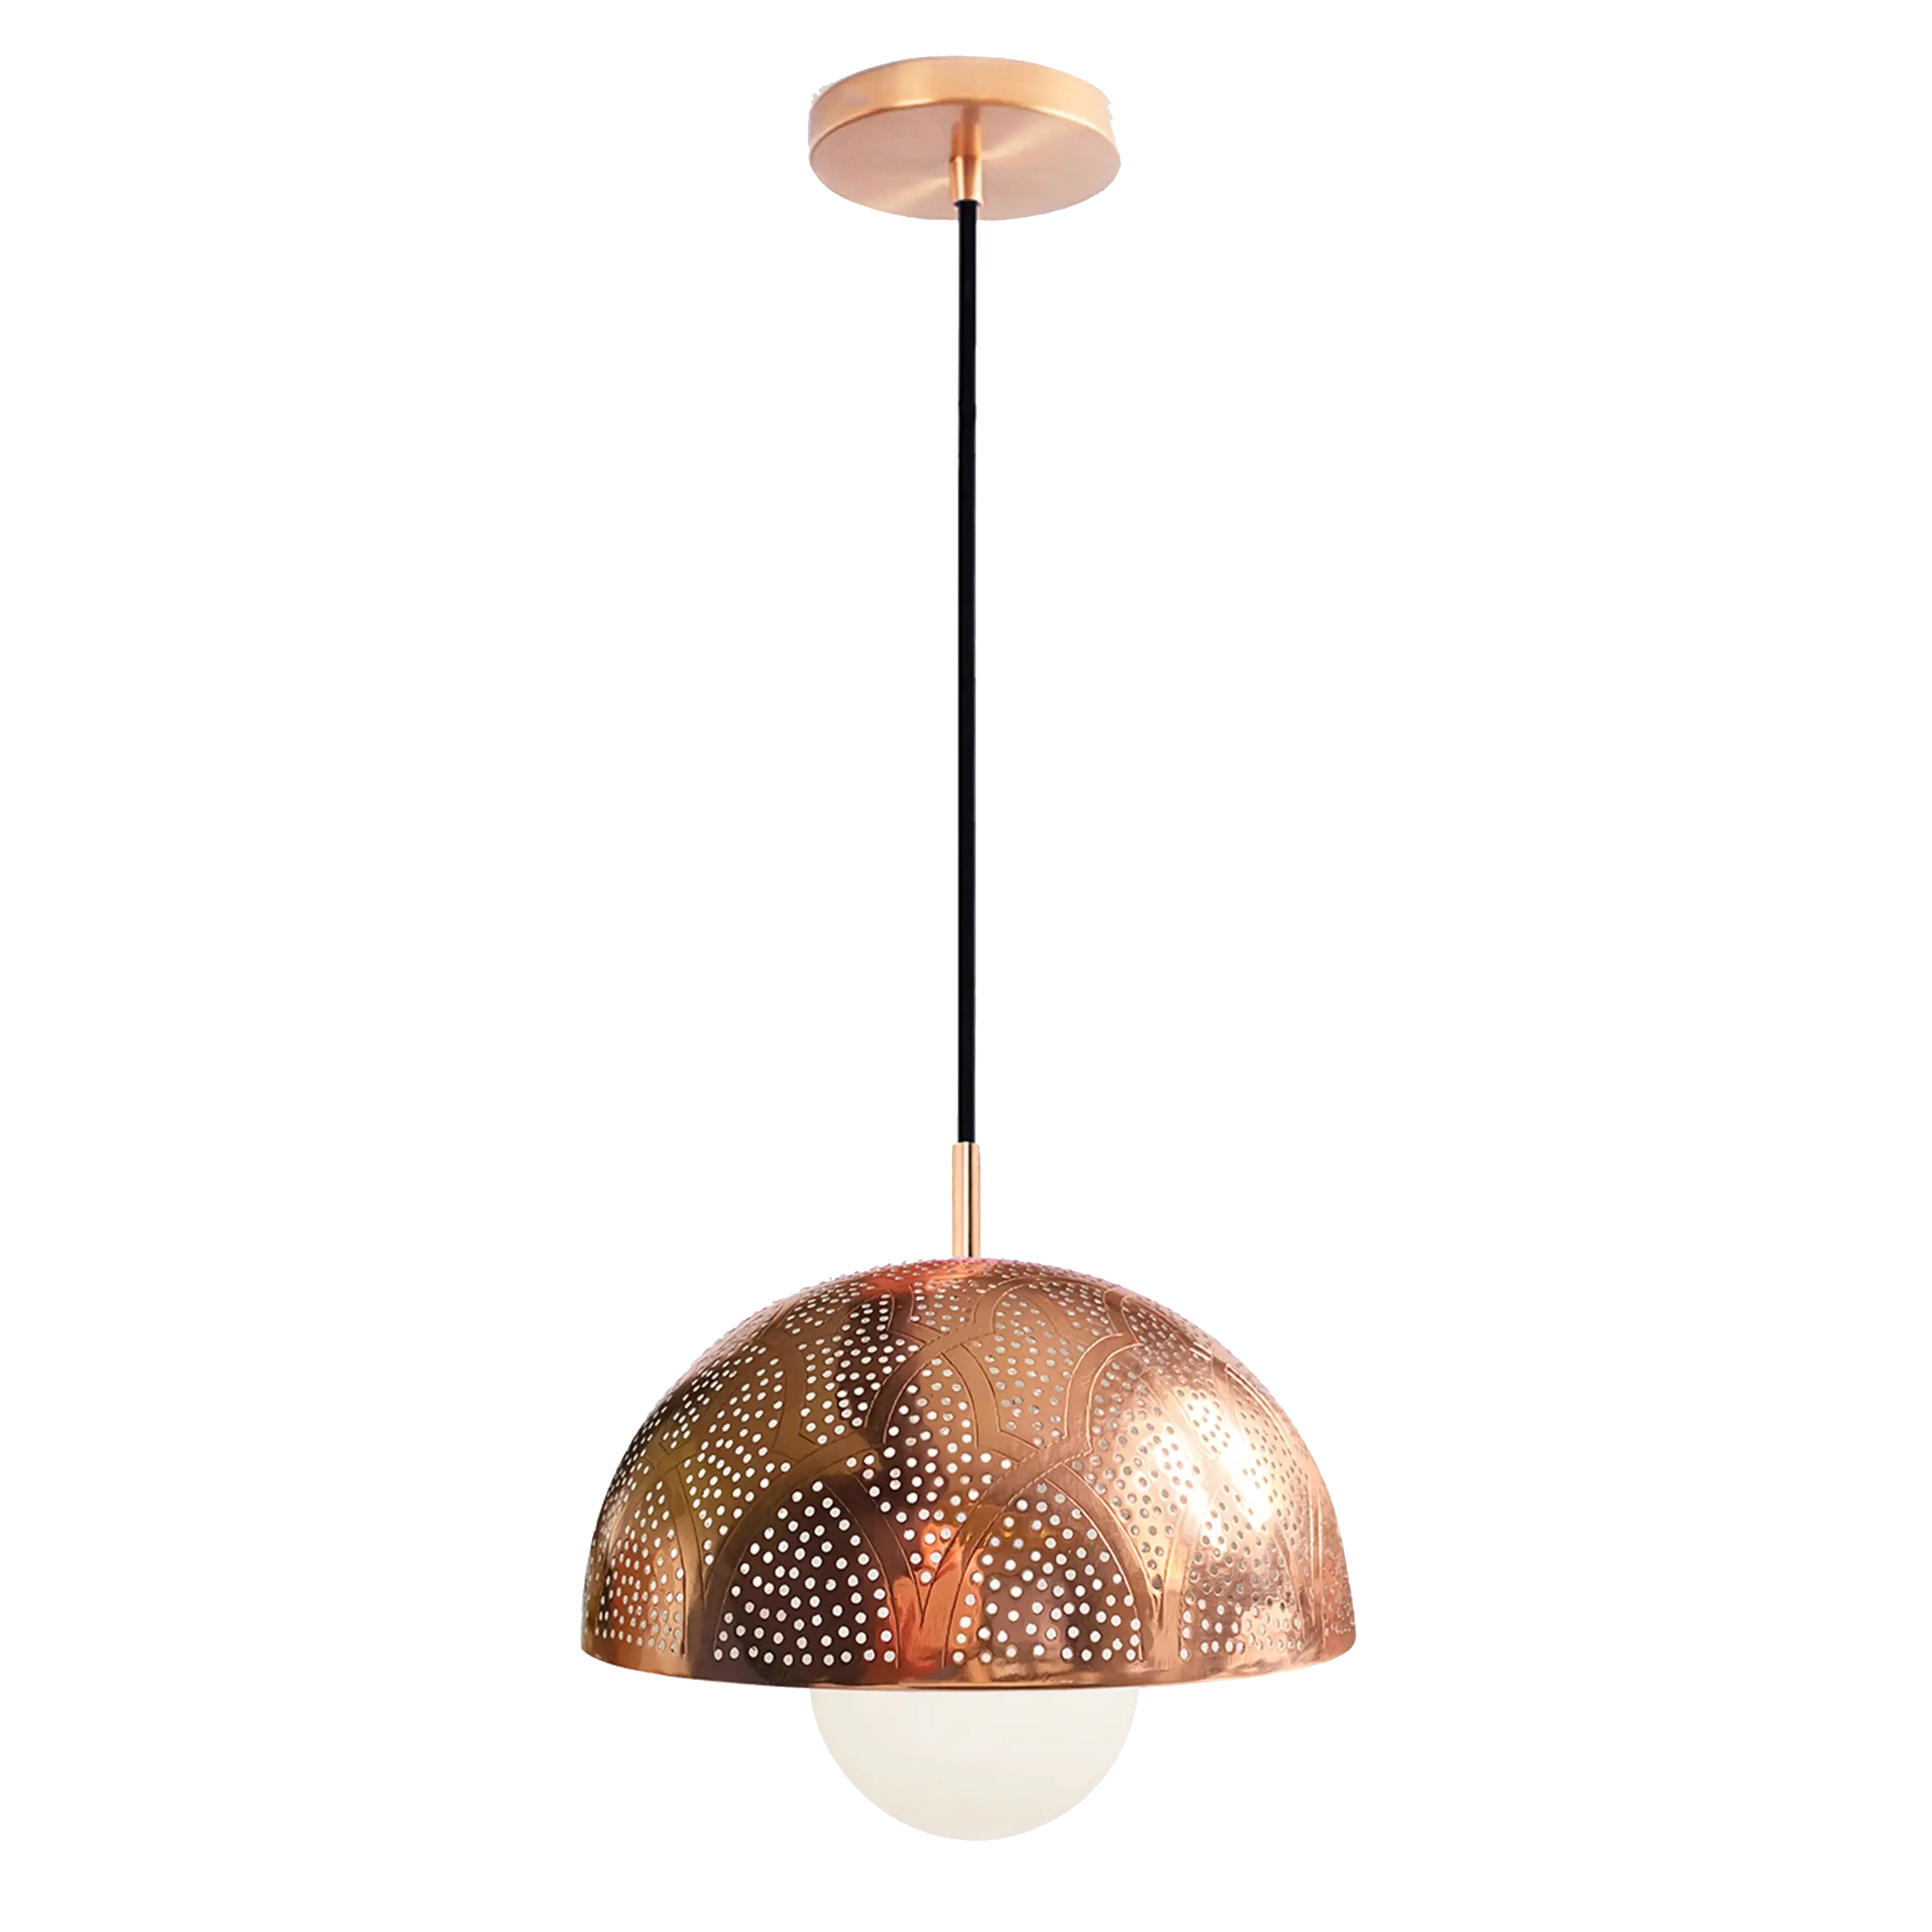 Dounia home Pendant light in Polished copper  made of Metal, Model: Zana Dome